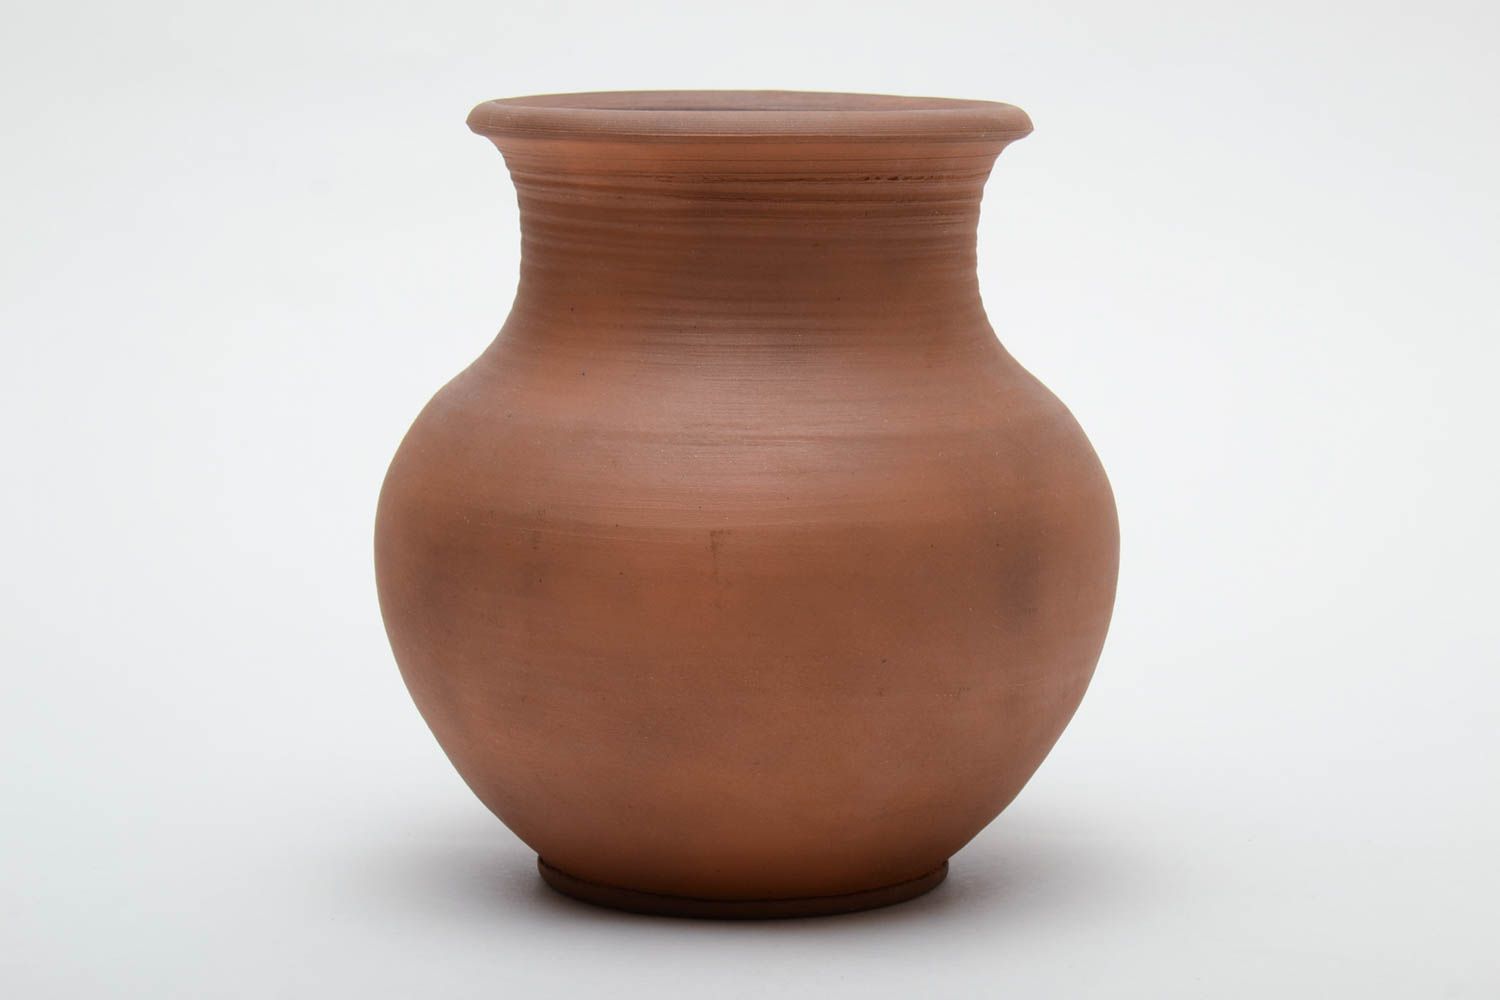 60 oz clay terracotta handmade water jug 2,33 lb photo 2